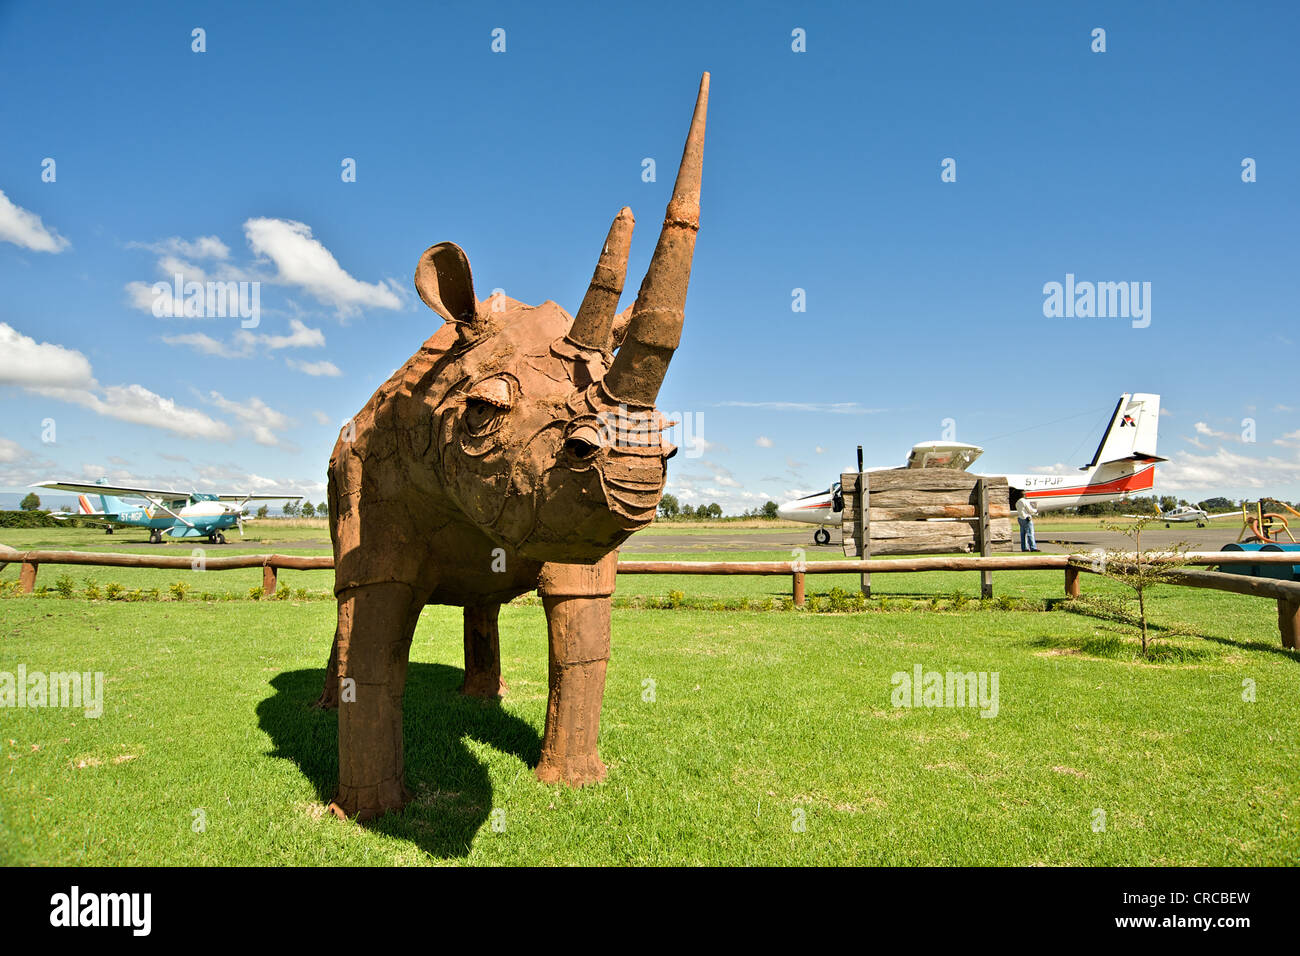 Statue des Nashorns in Laikipia Flugplatz. Kenia, Ostafrika. Stockfoto